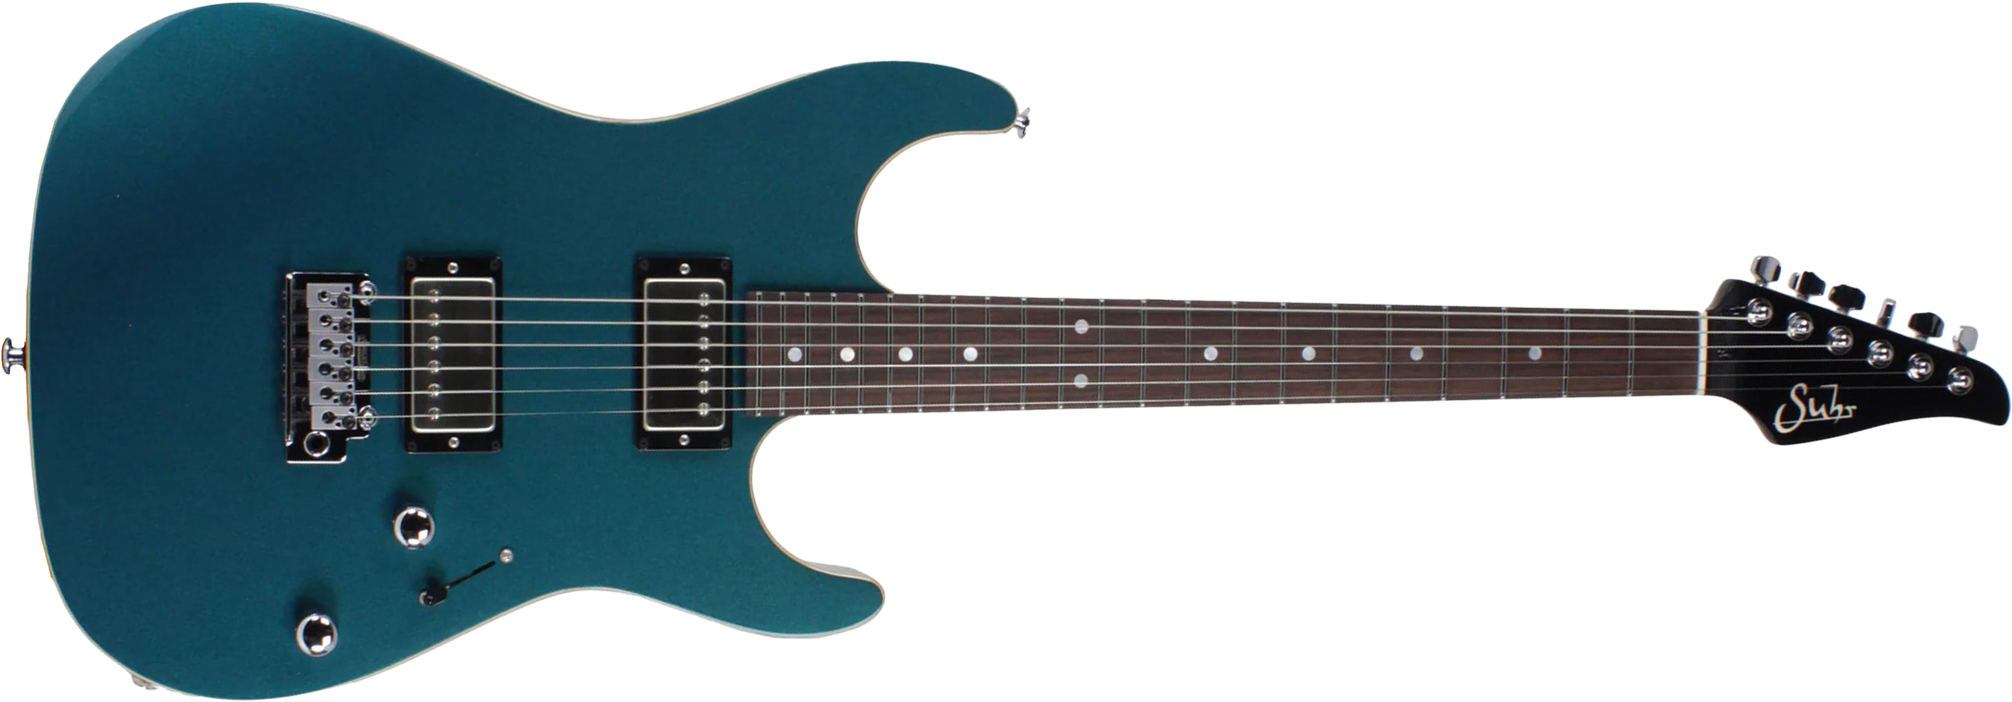 Suhr Pete Thorn Standard 01-sig-0012 Signature 2h Trem Rw - Ocean Turquoise Metallic - E-Gitarre in Str-Form - Main picture